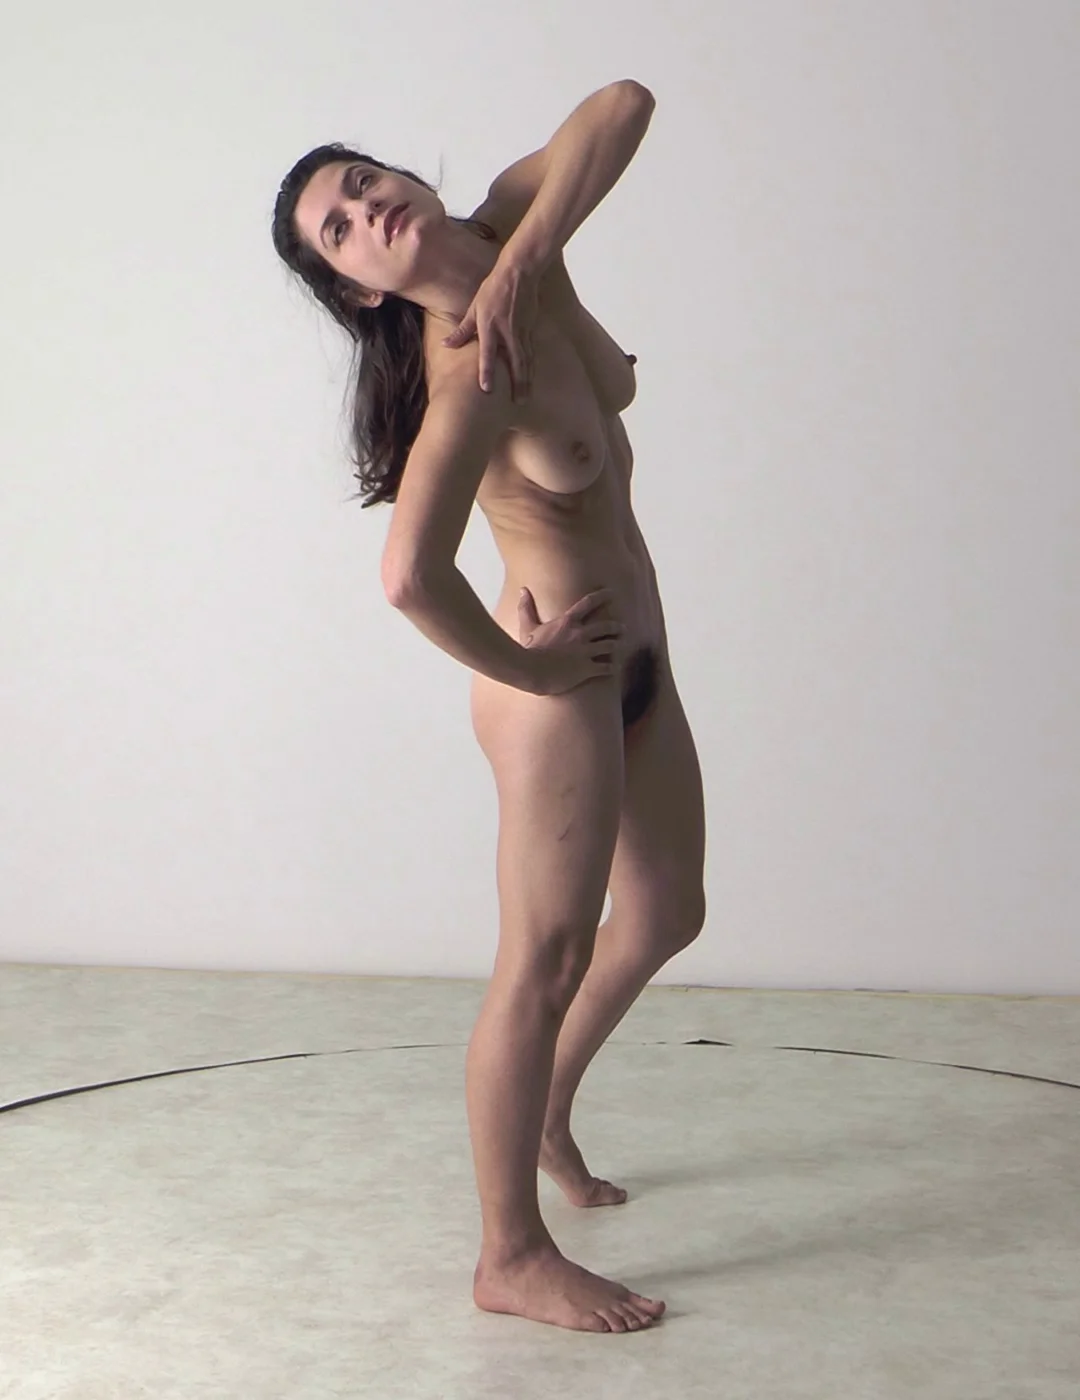 AnaIv311 Nude Art Models Pose  